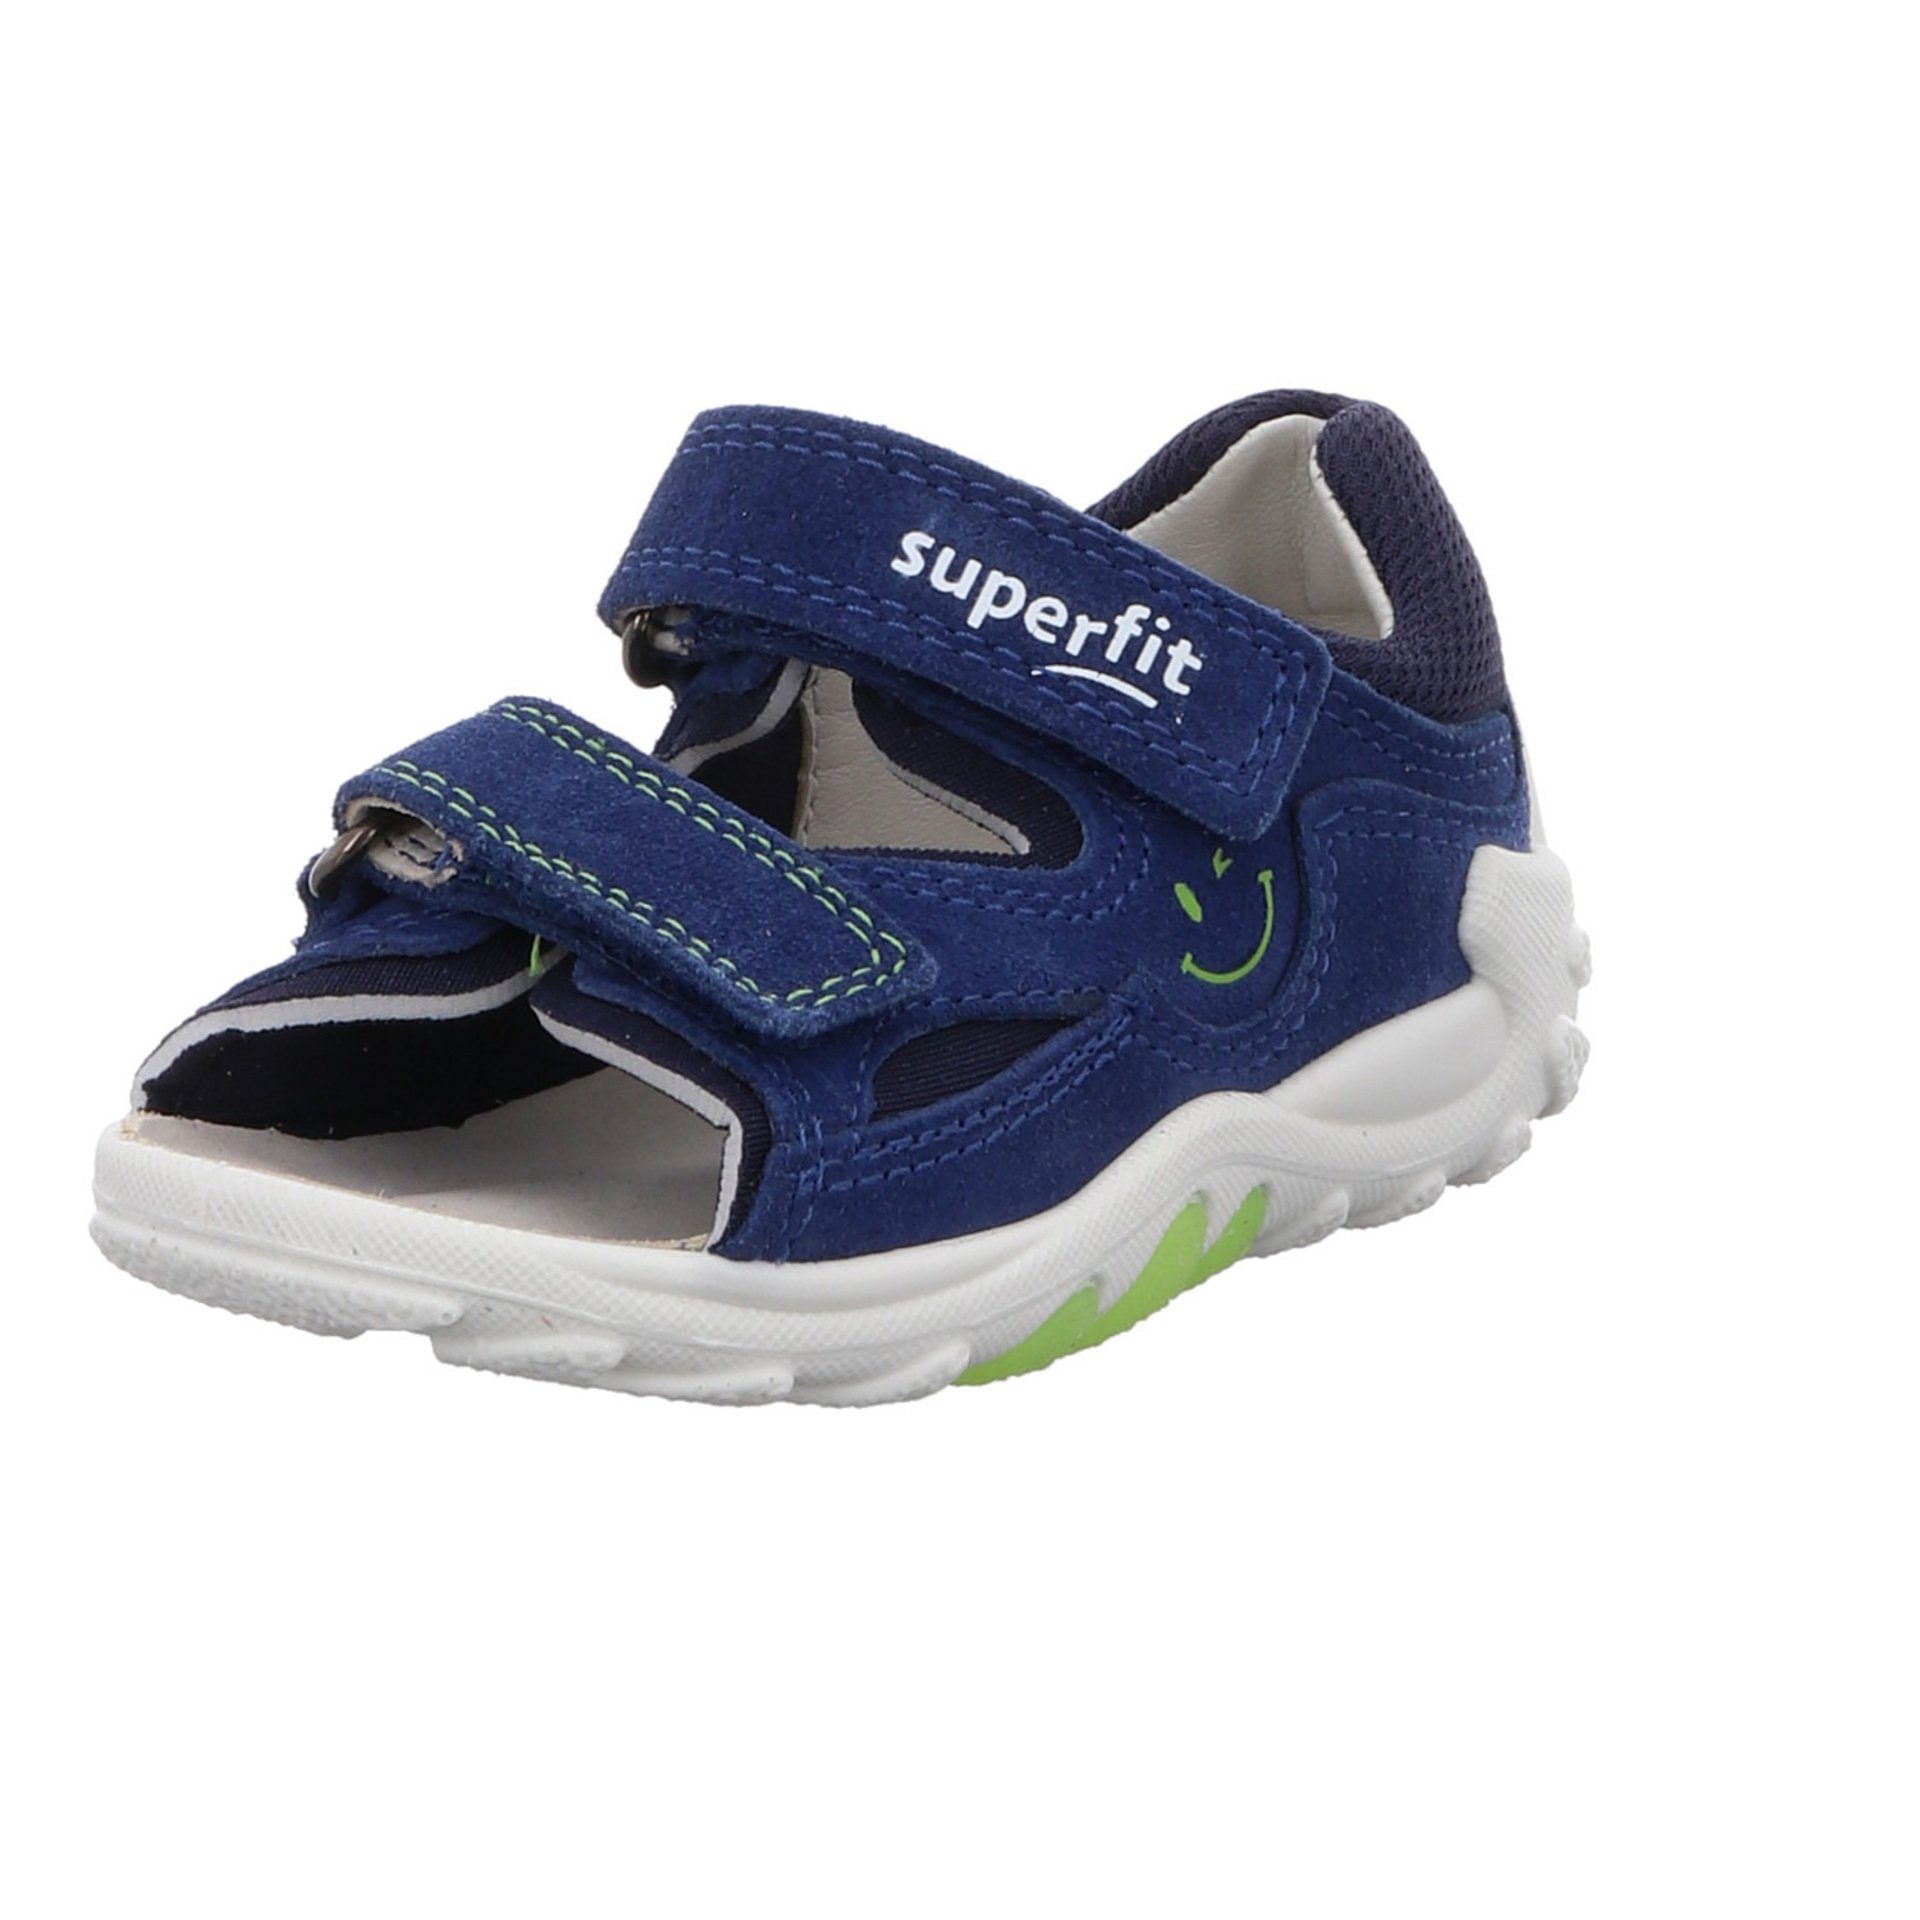 Superfit Jungen Sandalen Schuhe Flow Sandale Kinderschuhe Sandale Leder-/Textilkombination BLAU/HELLGRÜN